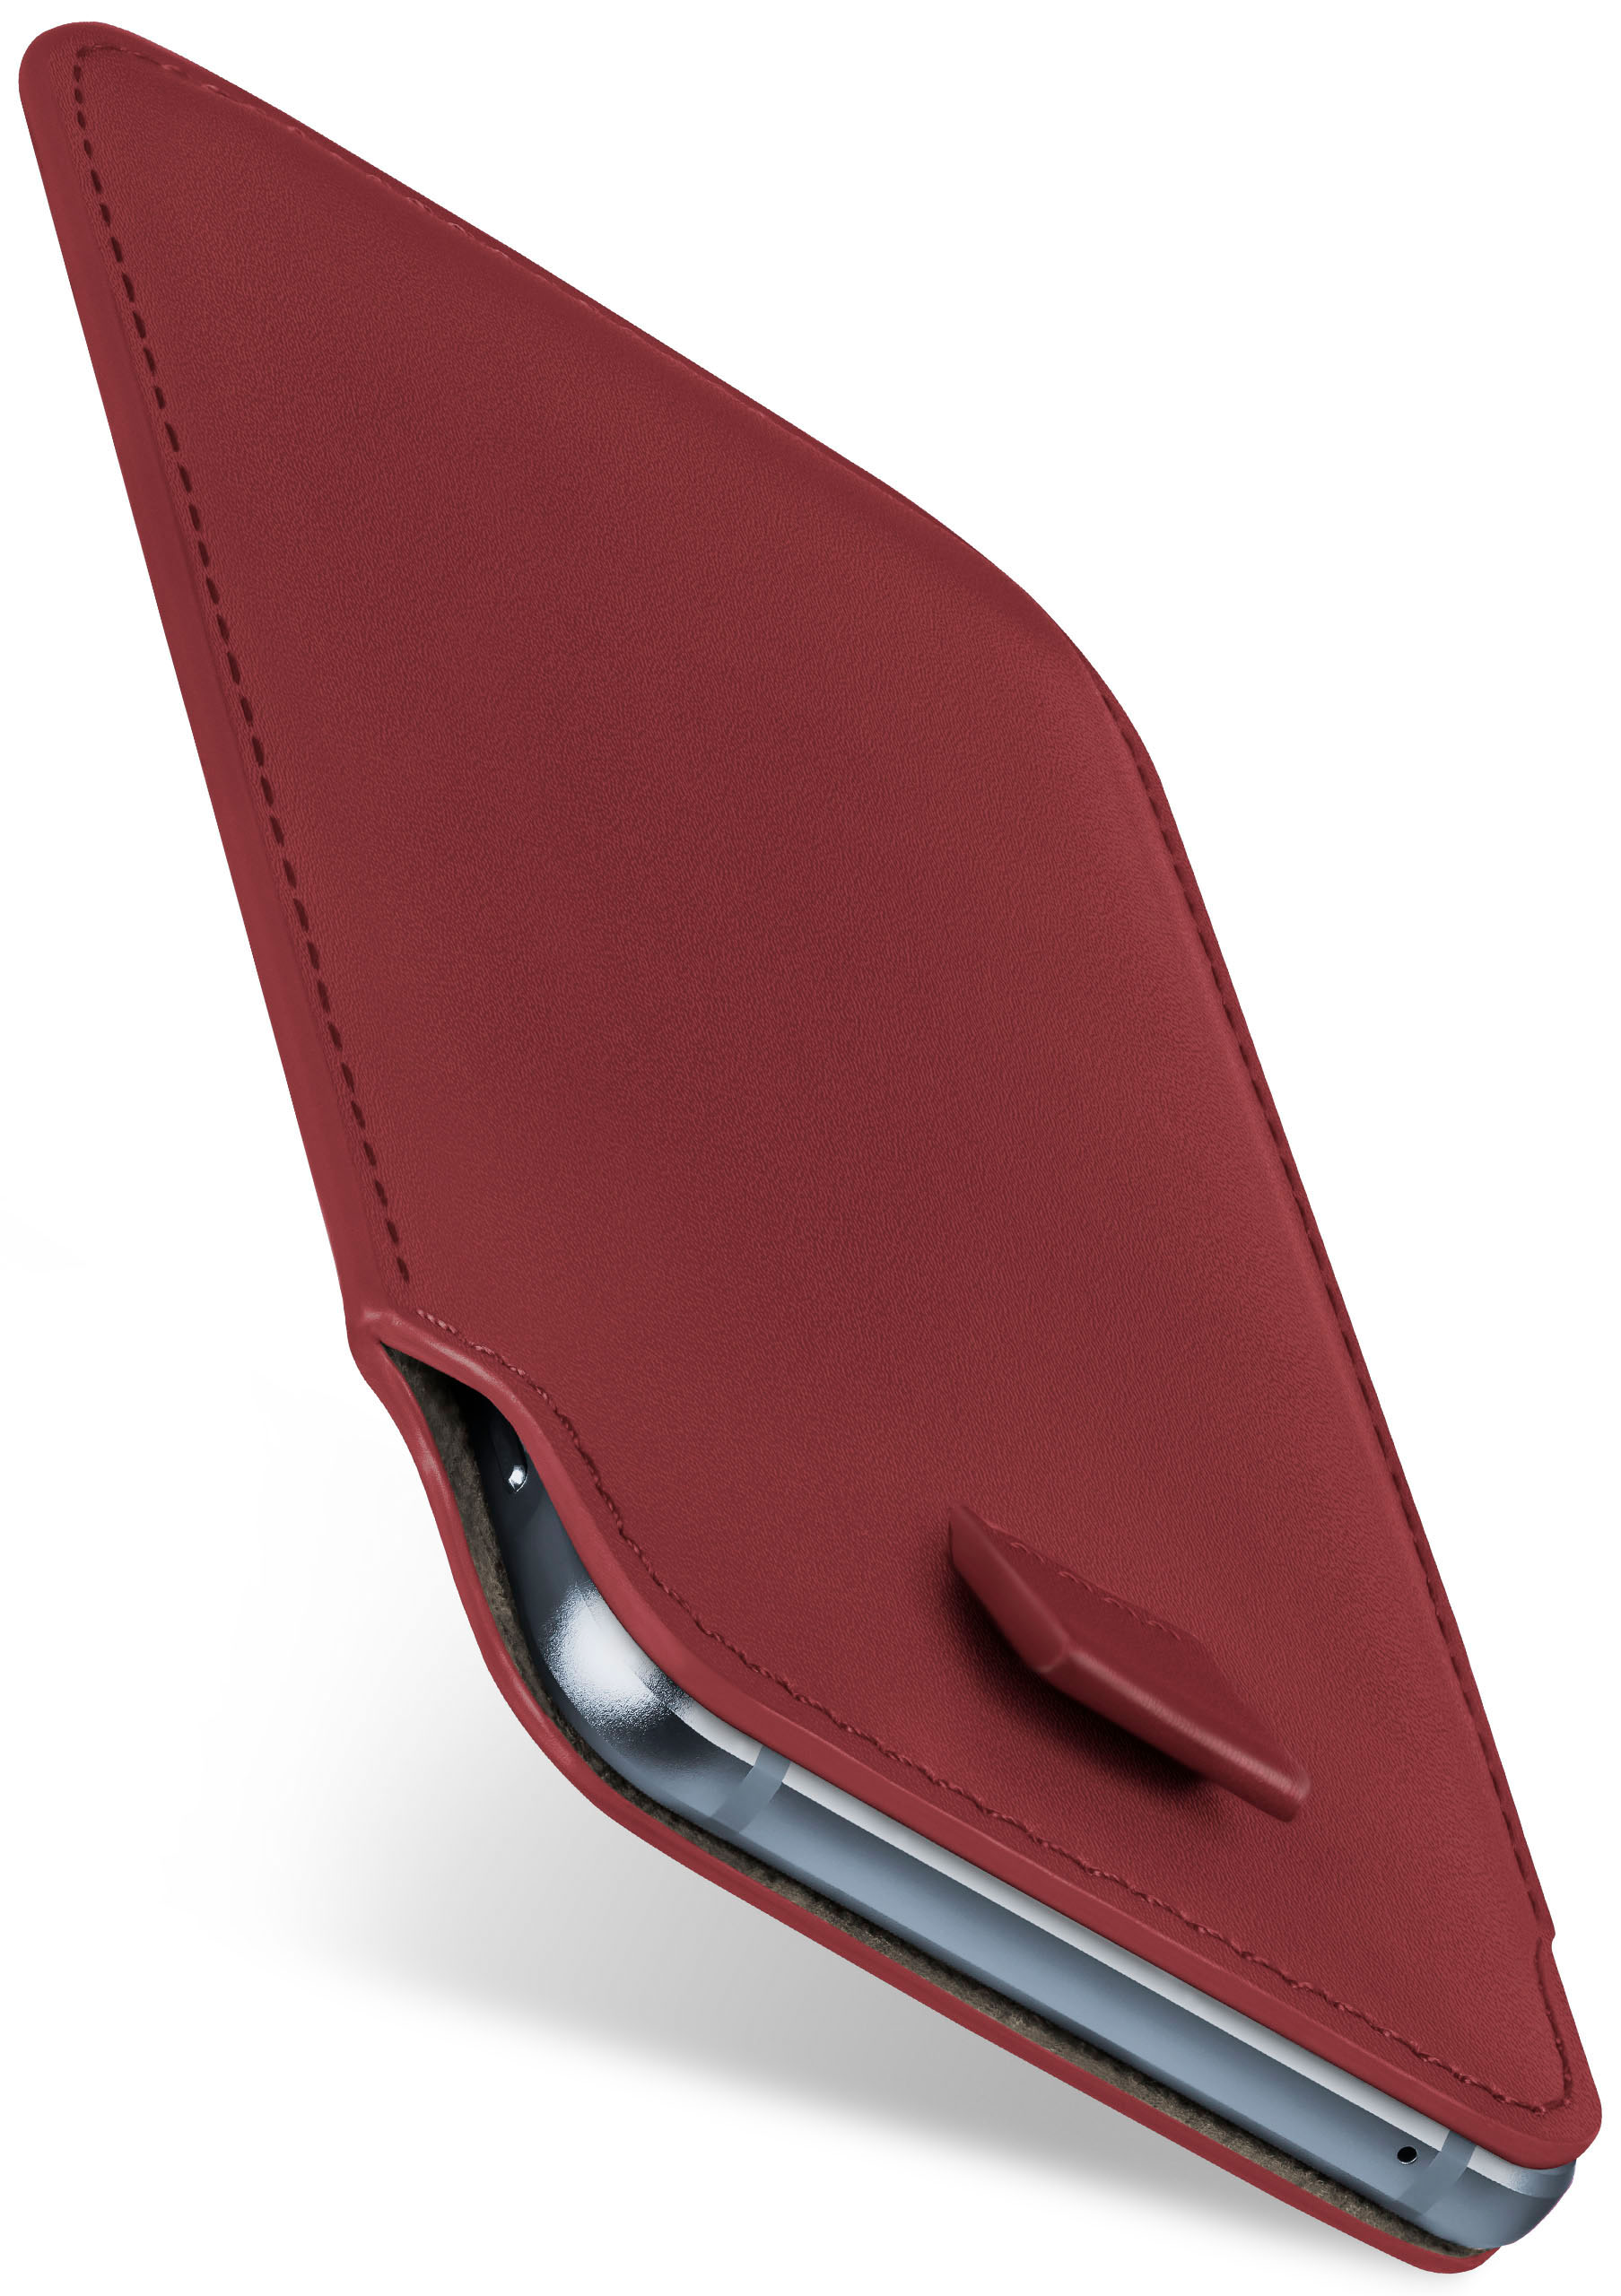 Full Case, HTC, Plus, MOEX Slide U12 Maroon-Red Cover,